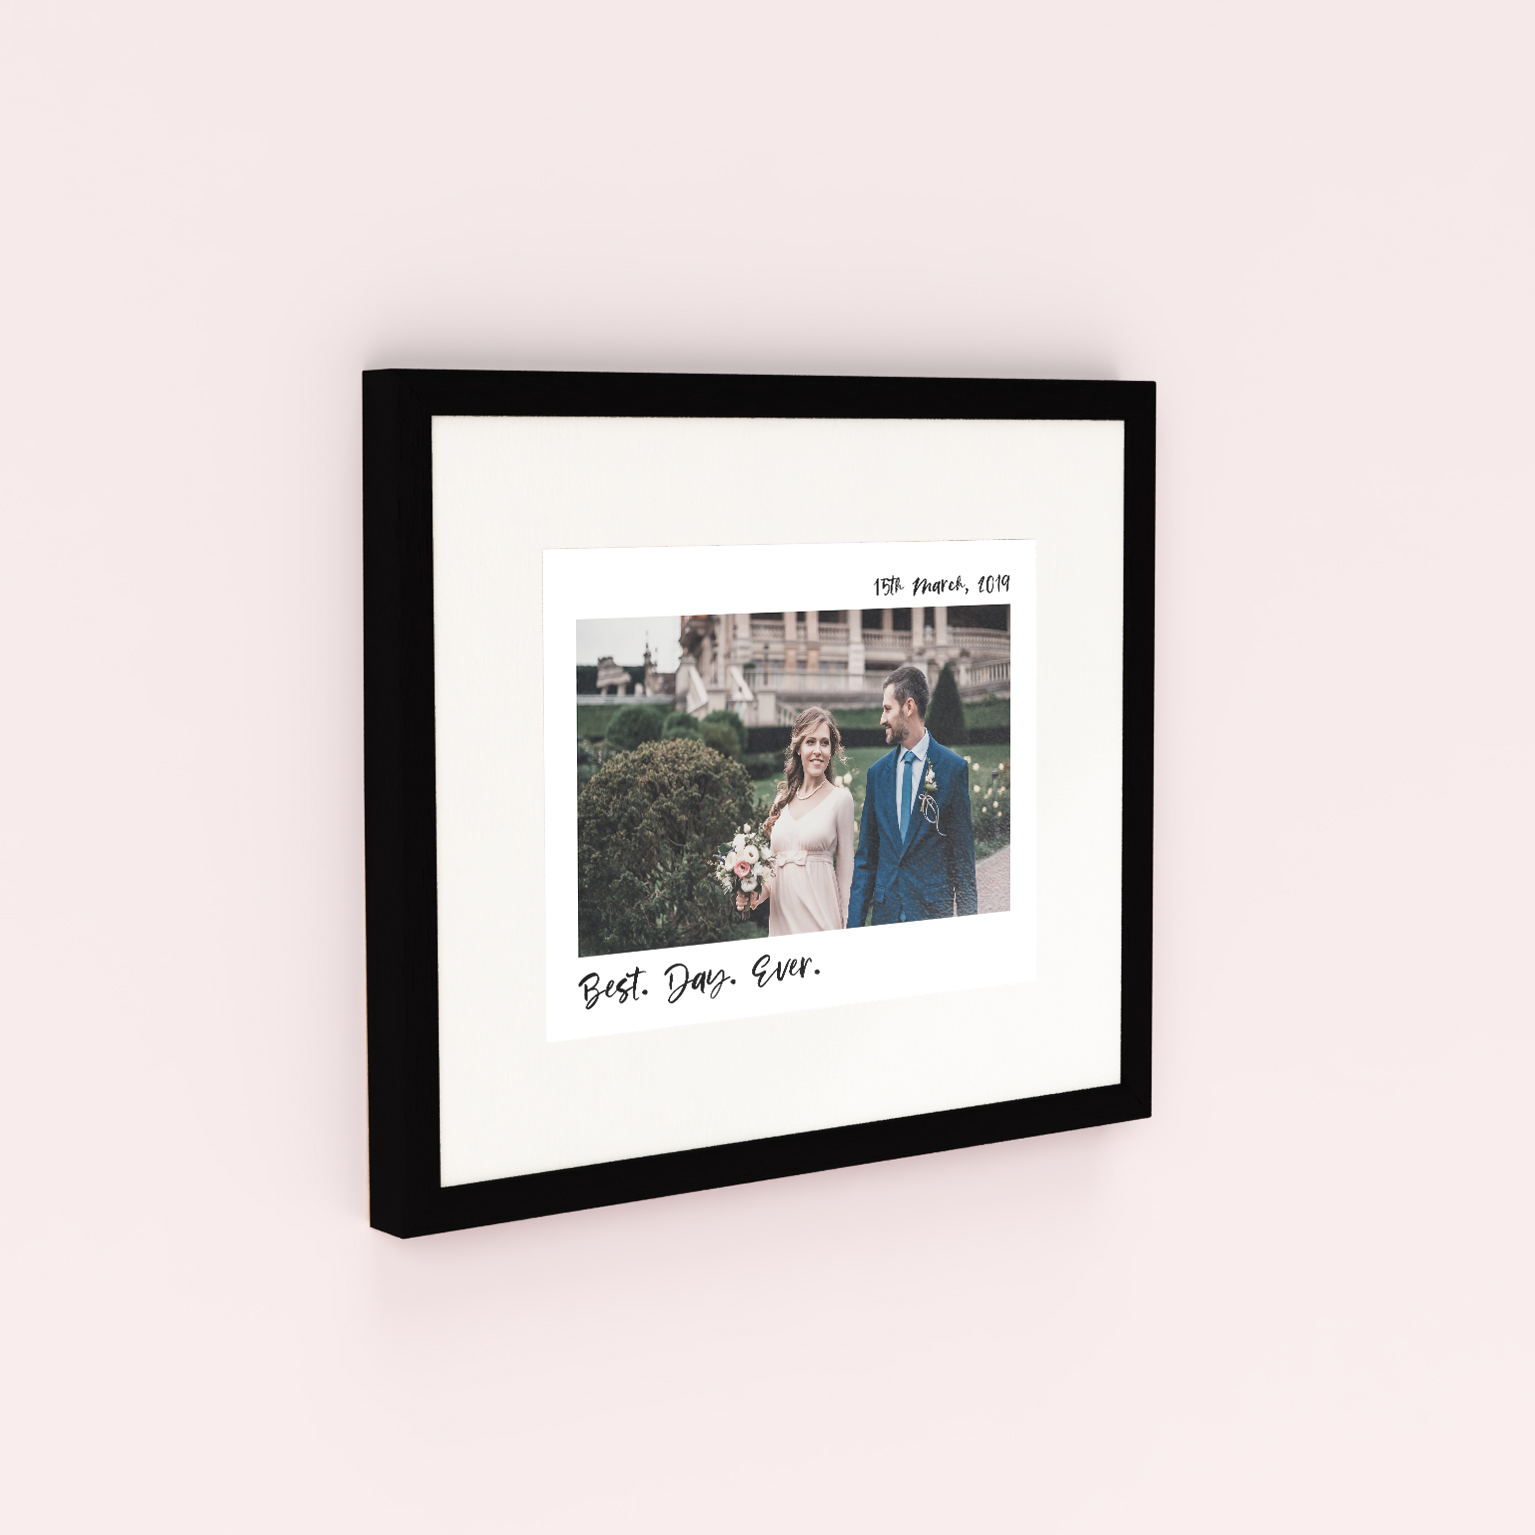 Marital Joy Framed Photo Print - A timeless keepsake for everlasting love and wedding memories.